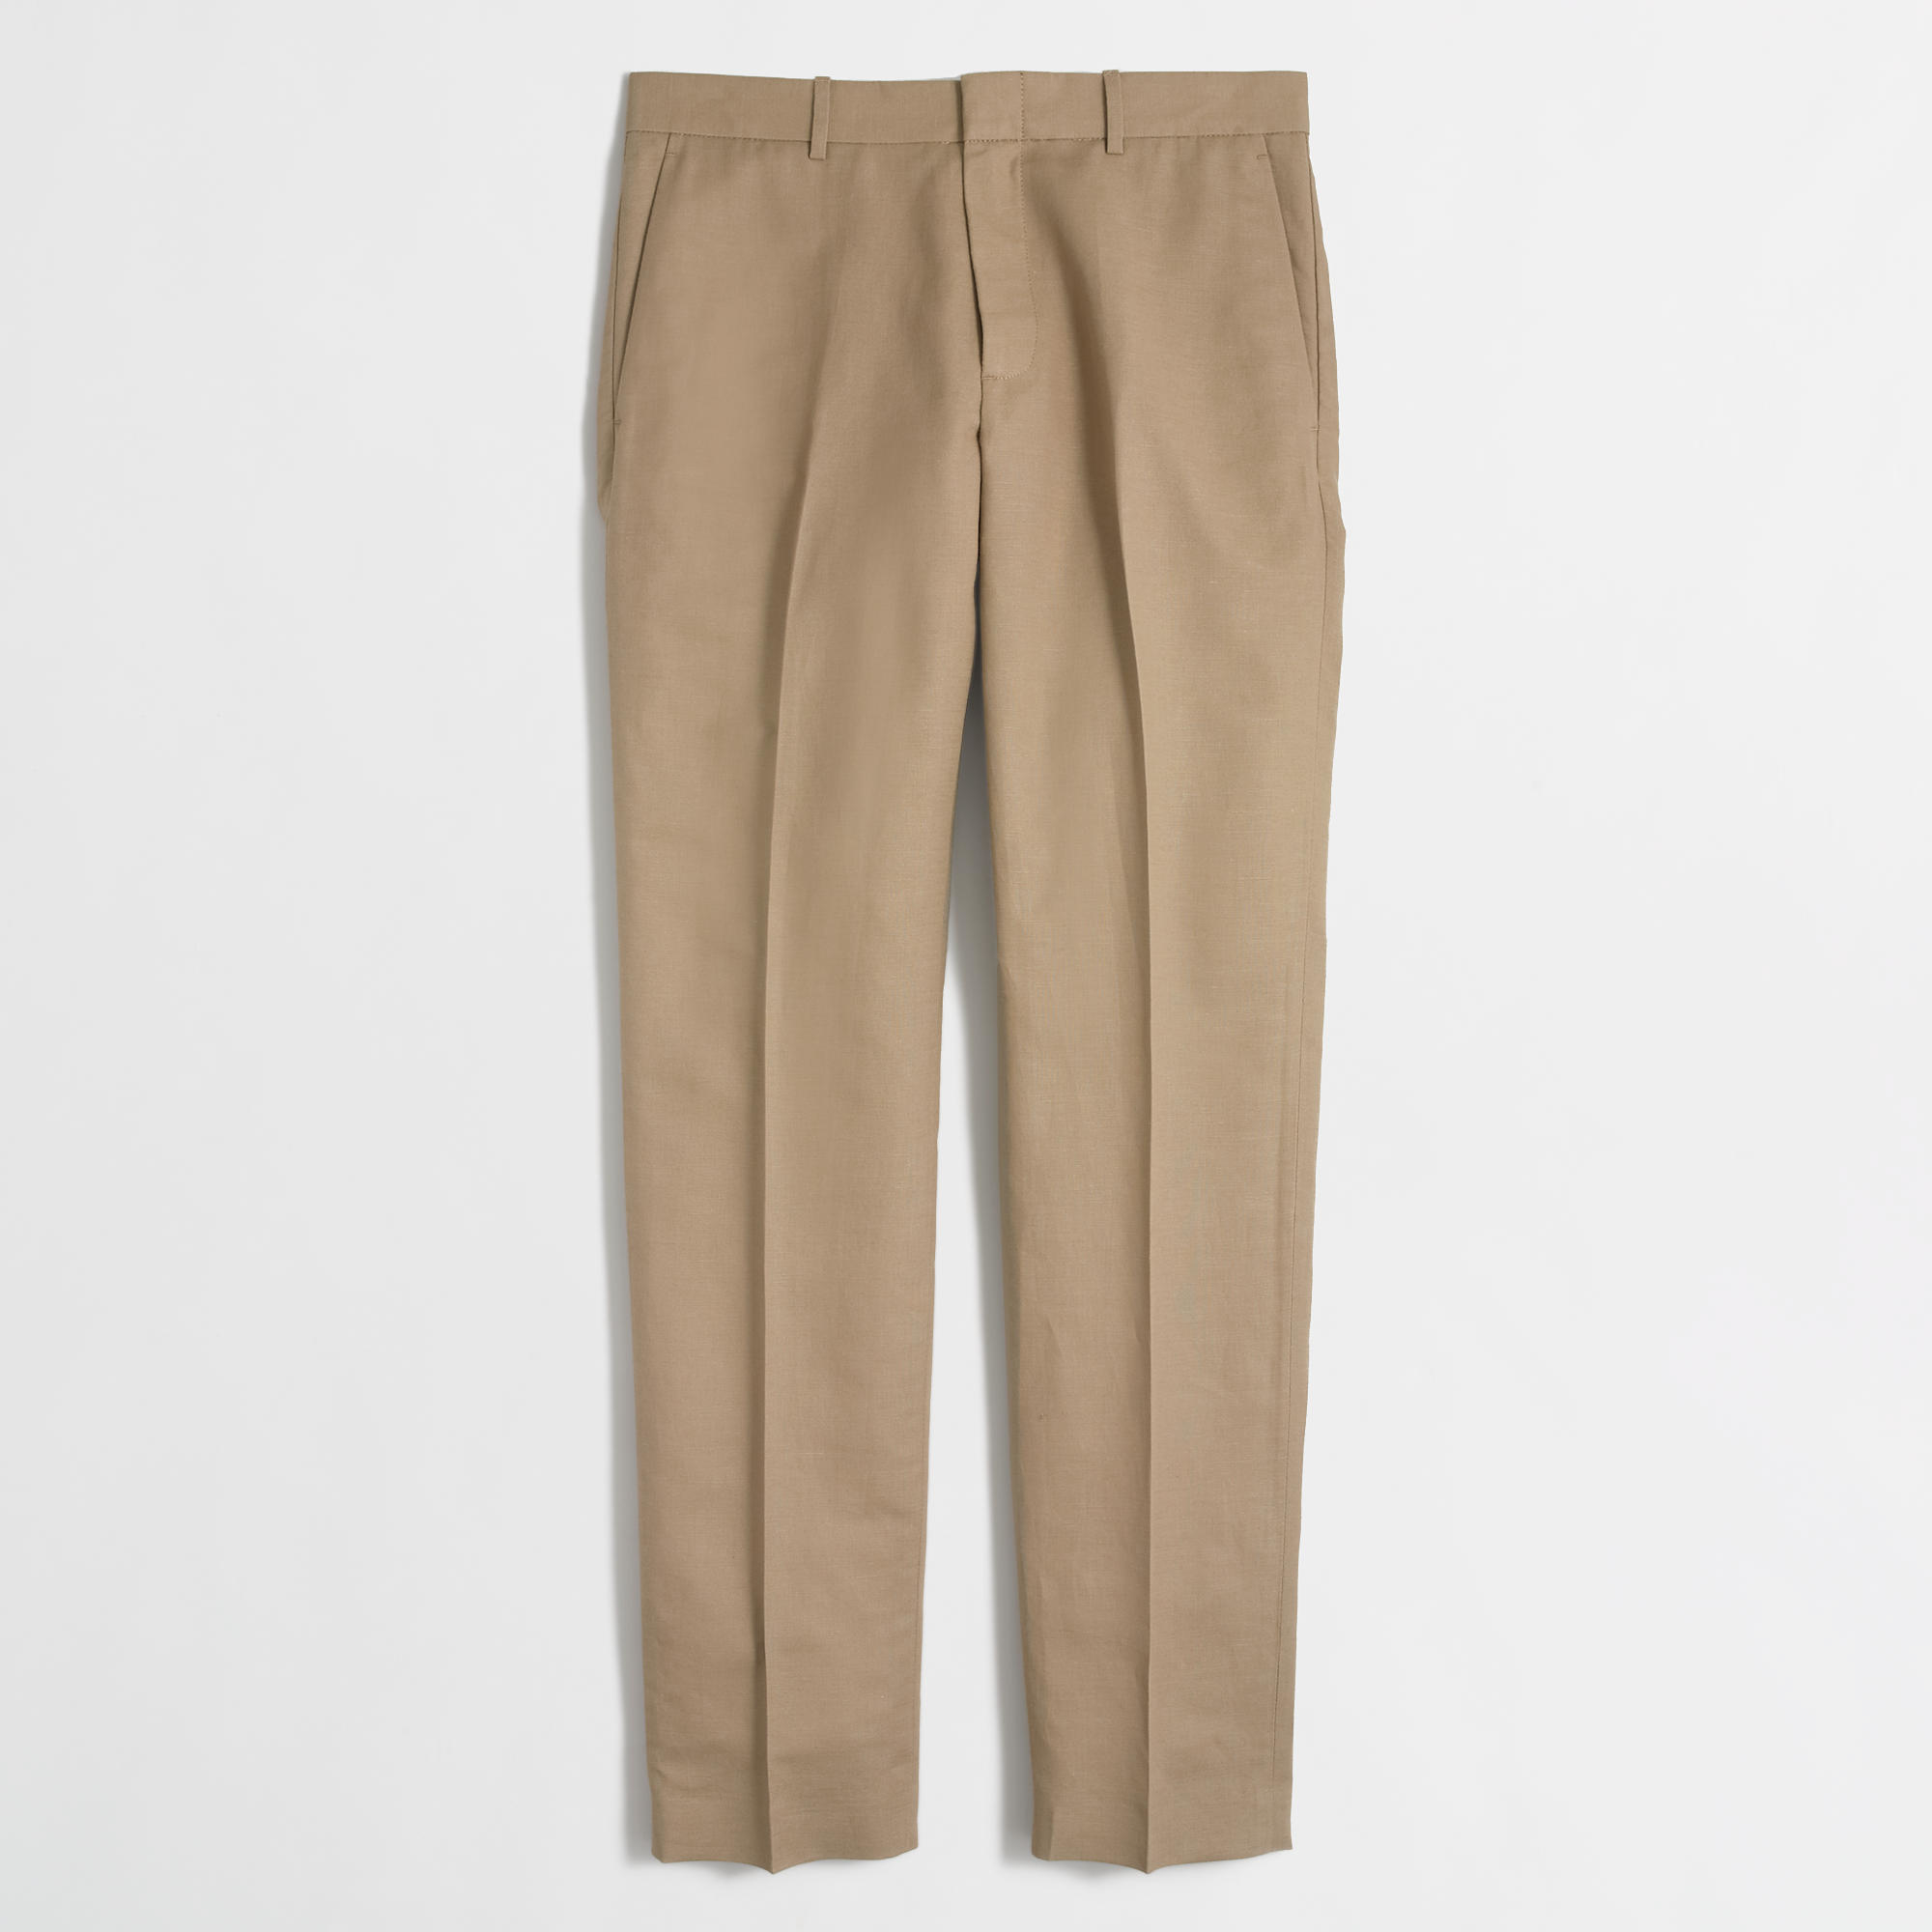 Lyst - J.Crew Factory Thompson Slim Suit Pant In Slub Linen in Natural ...